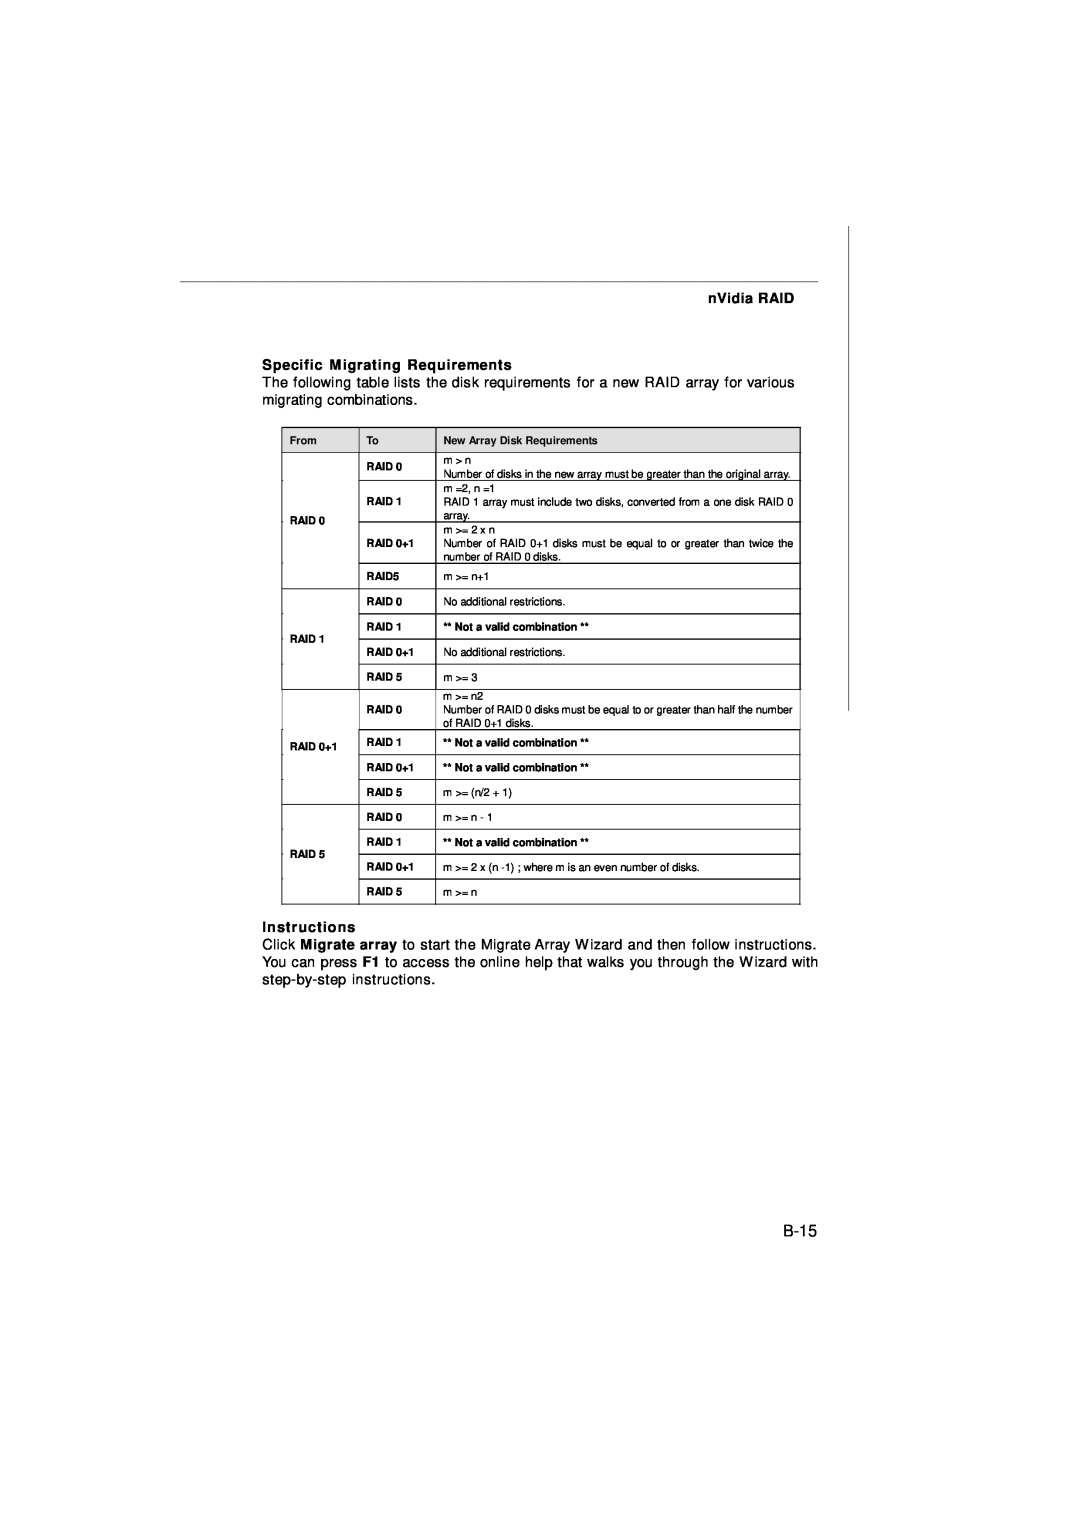 Nvidia MS-7374 manual B-15, nVidia RAID Specific Migrating Requirements, Instructions 